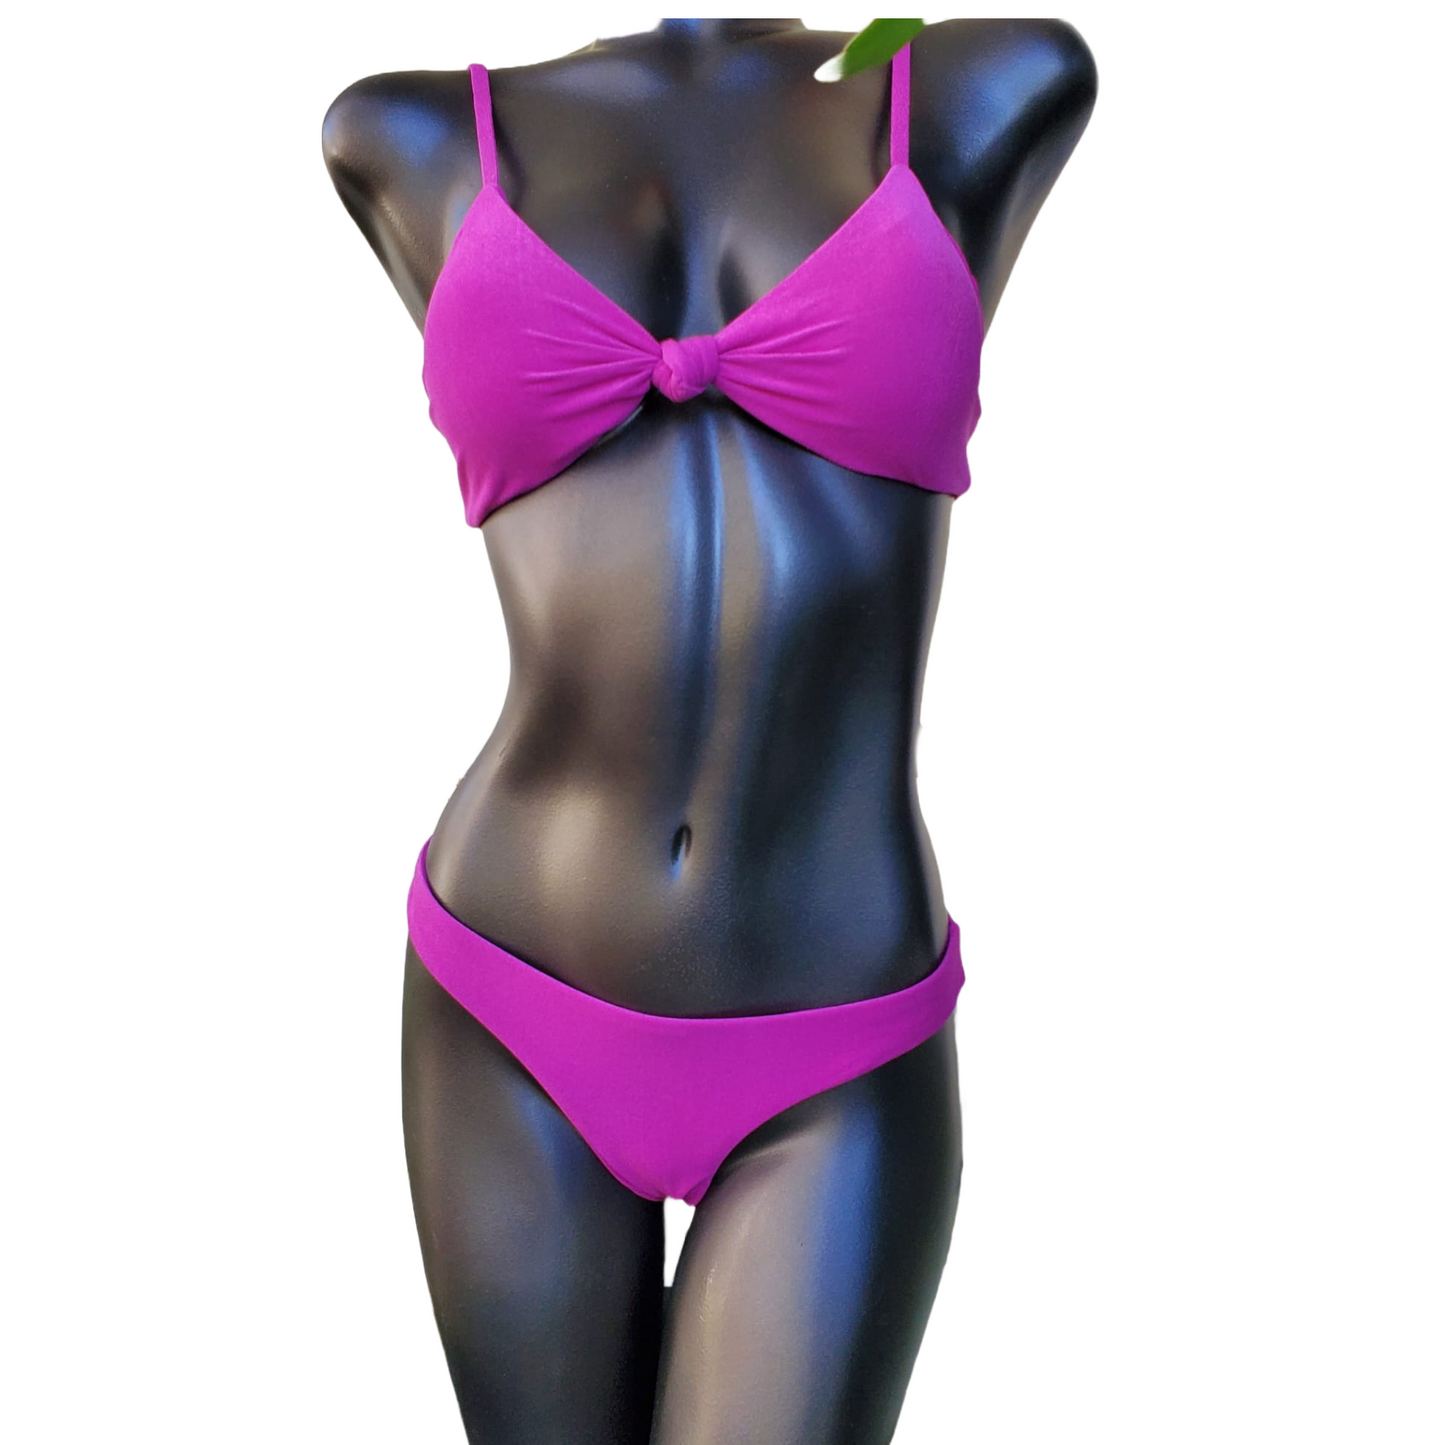 Fuchsia Shine seamless bottom bikini set